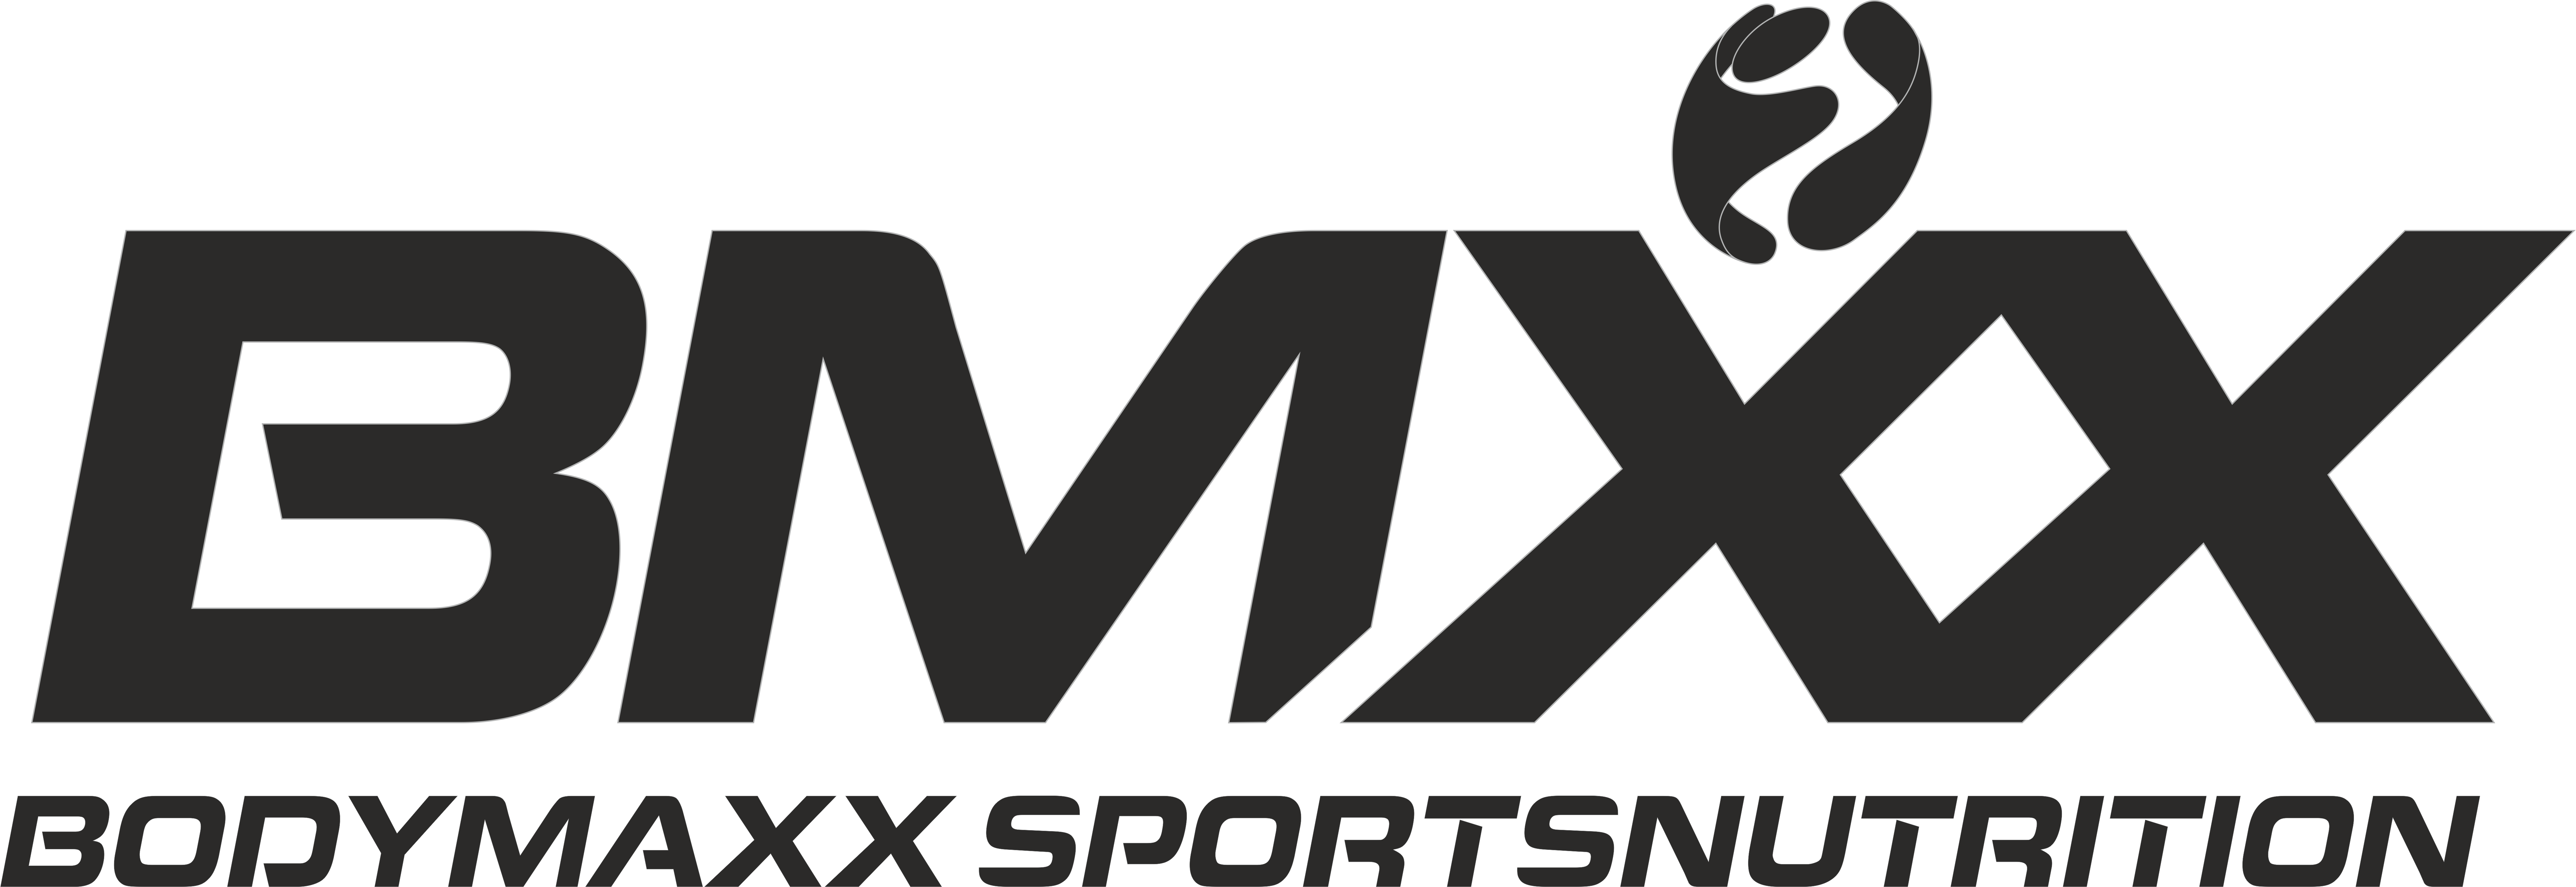 BMXX Nutrition